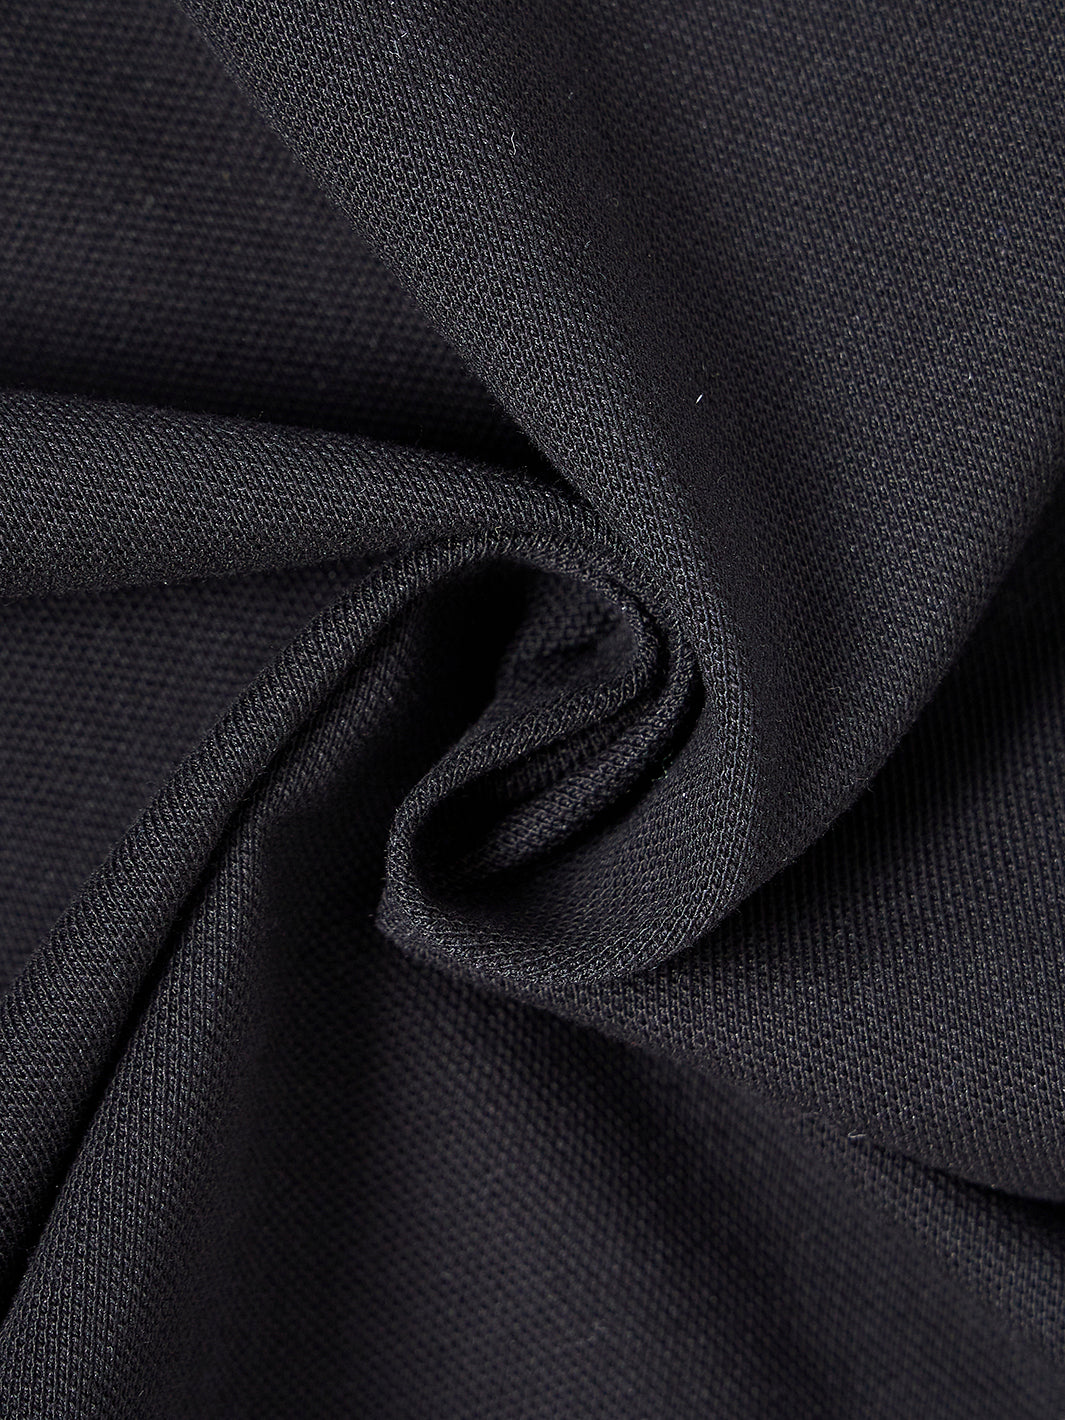 Jersey Crop Length - Black